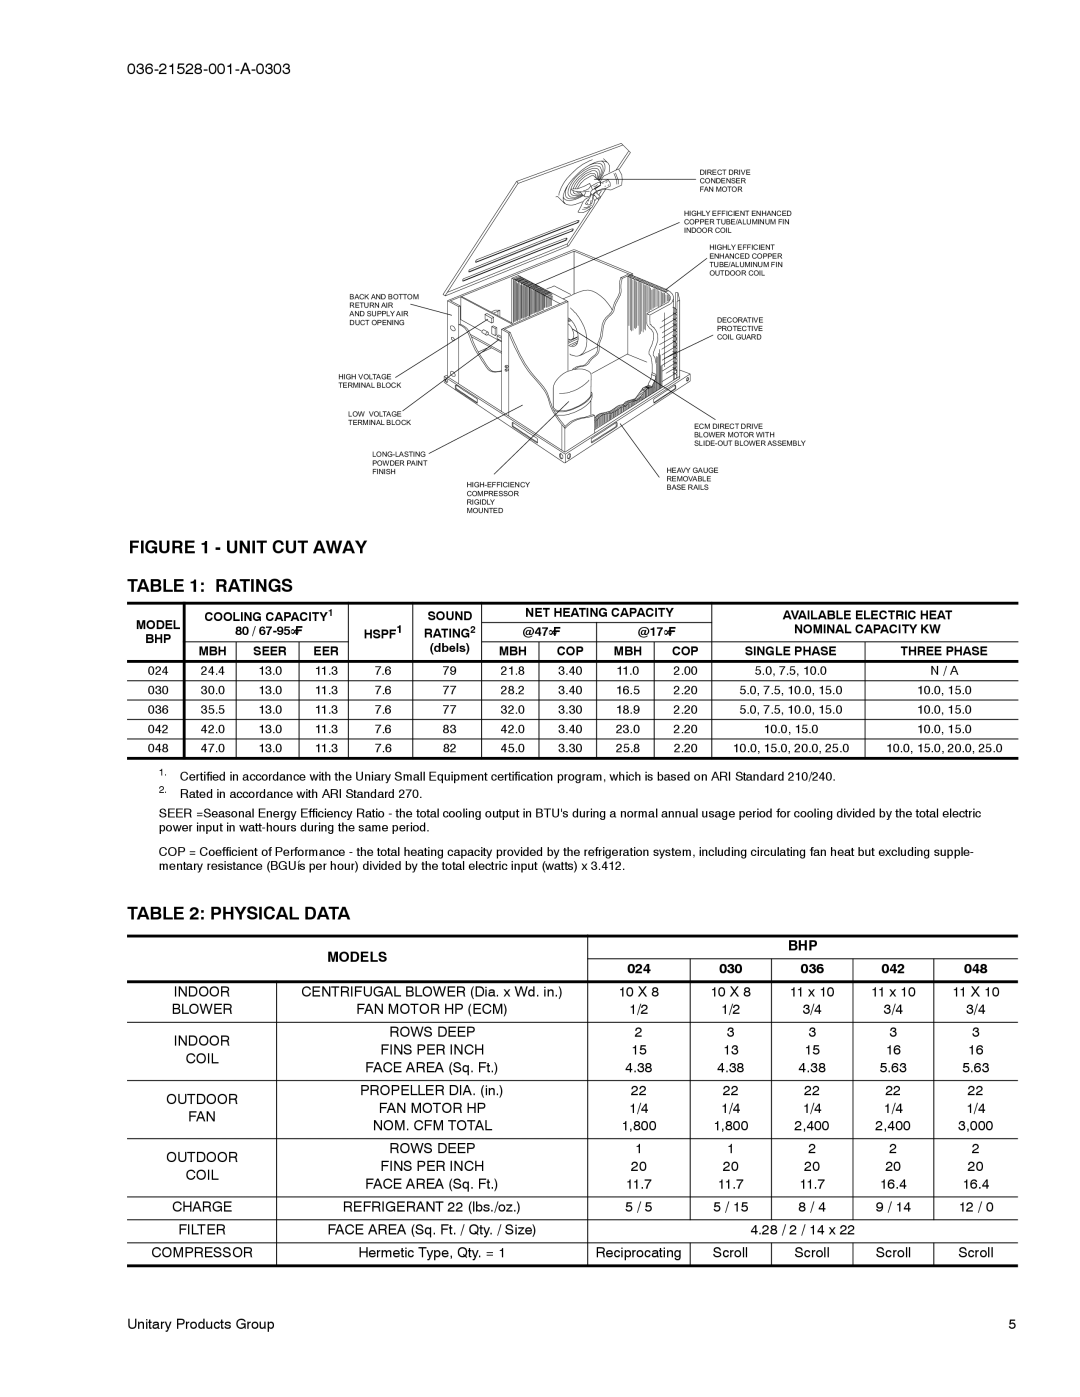 York B1HP024 THRU 048 manual Unit Cut Away Ratings, Physical Data, Models 